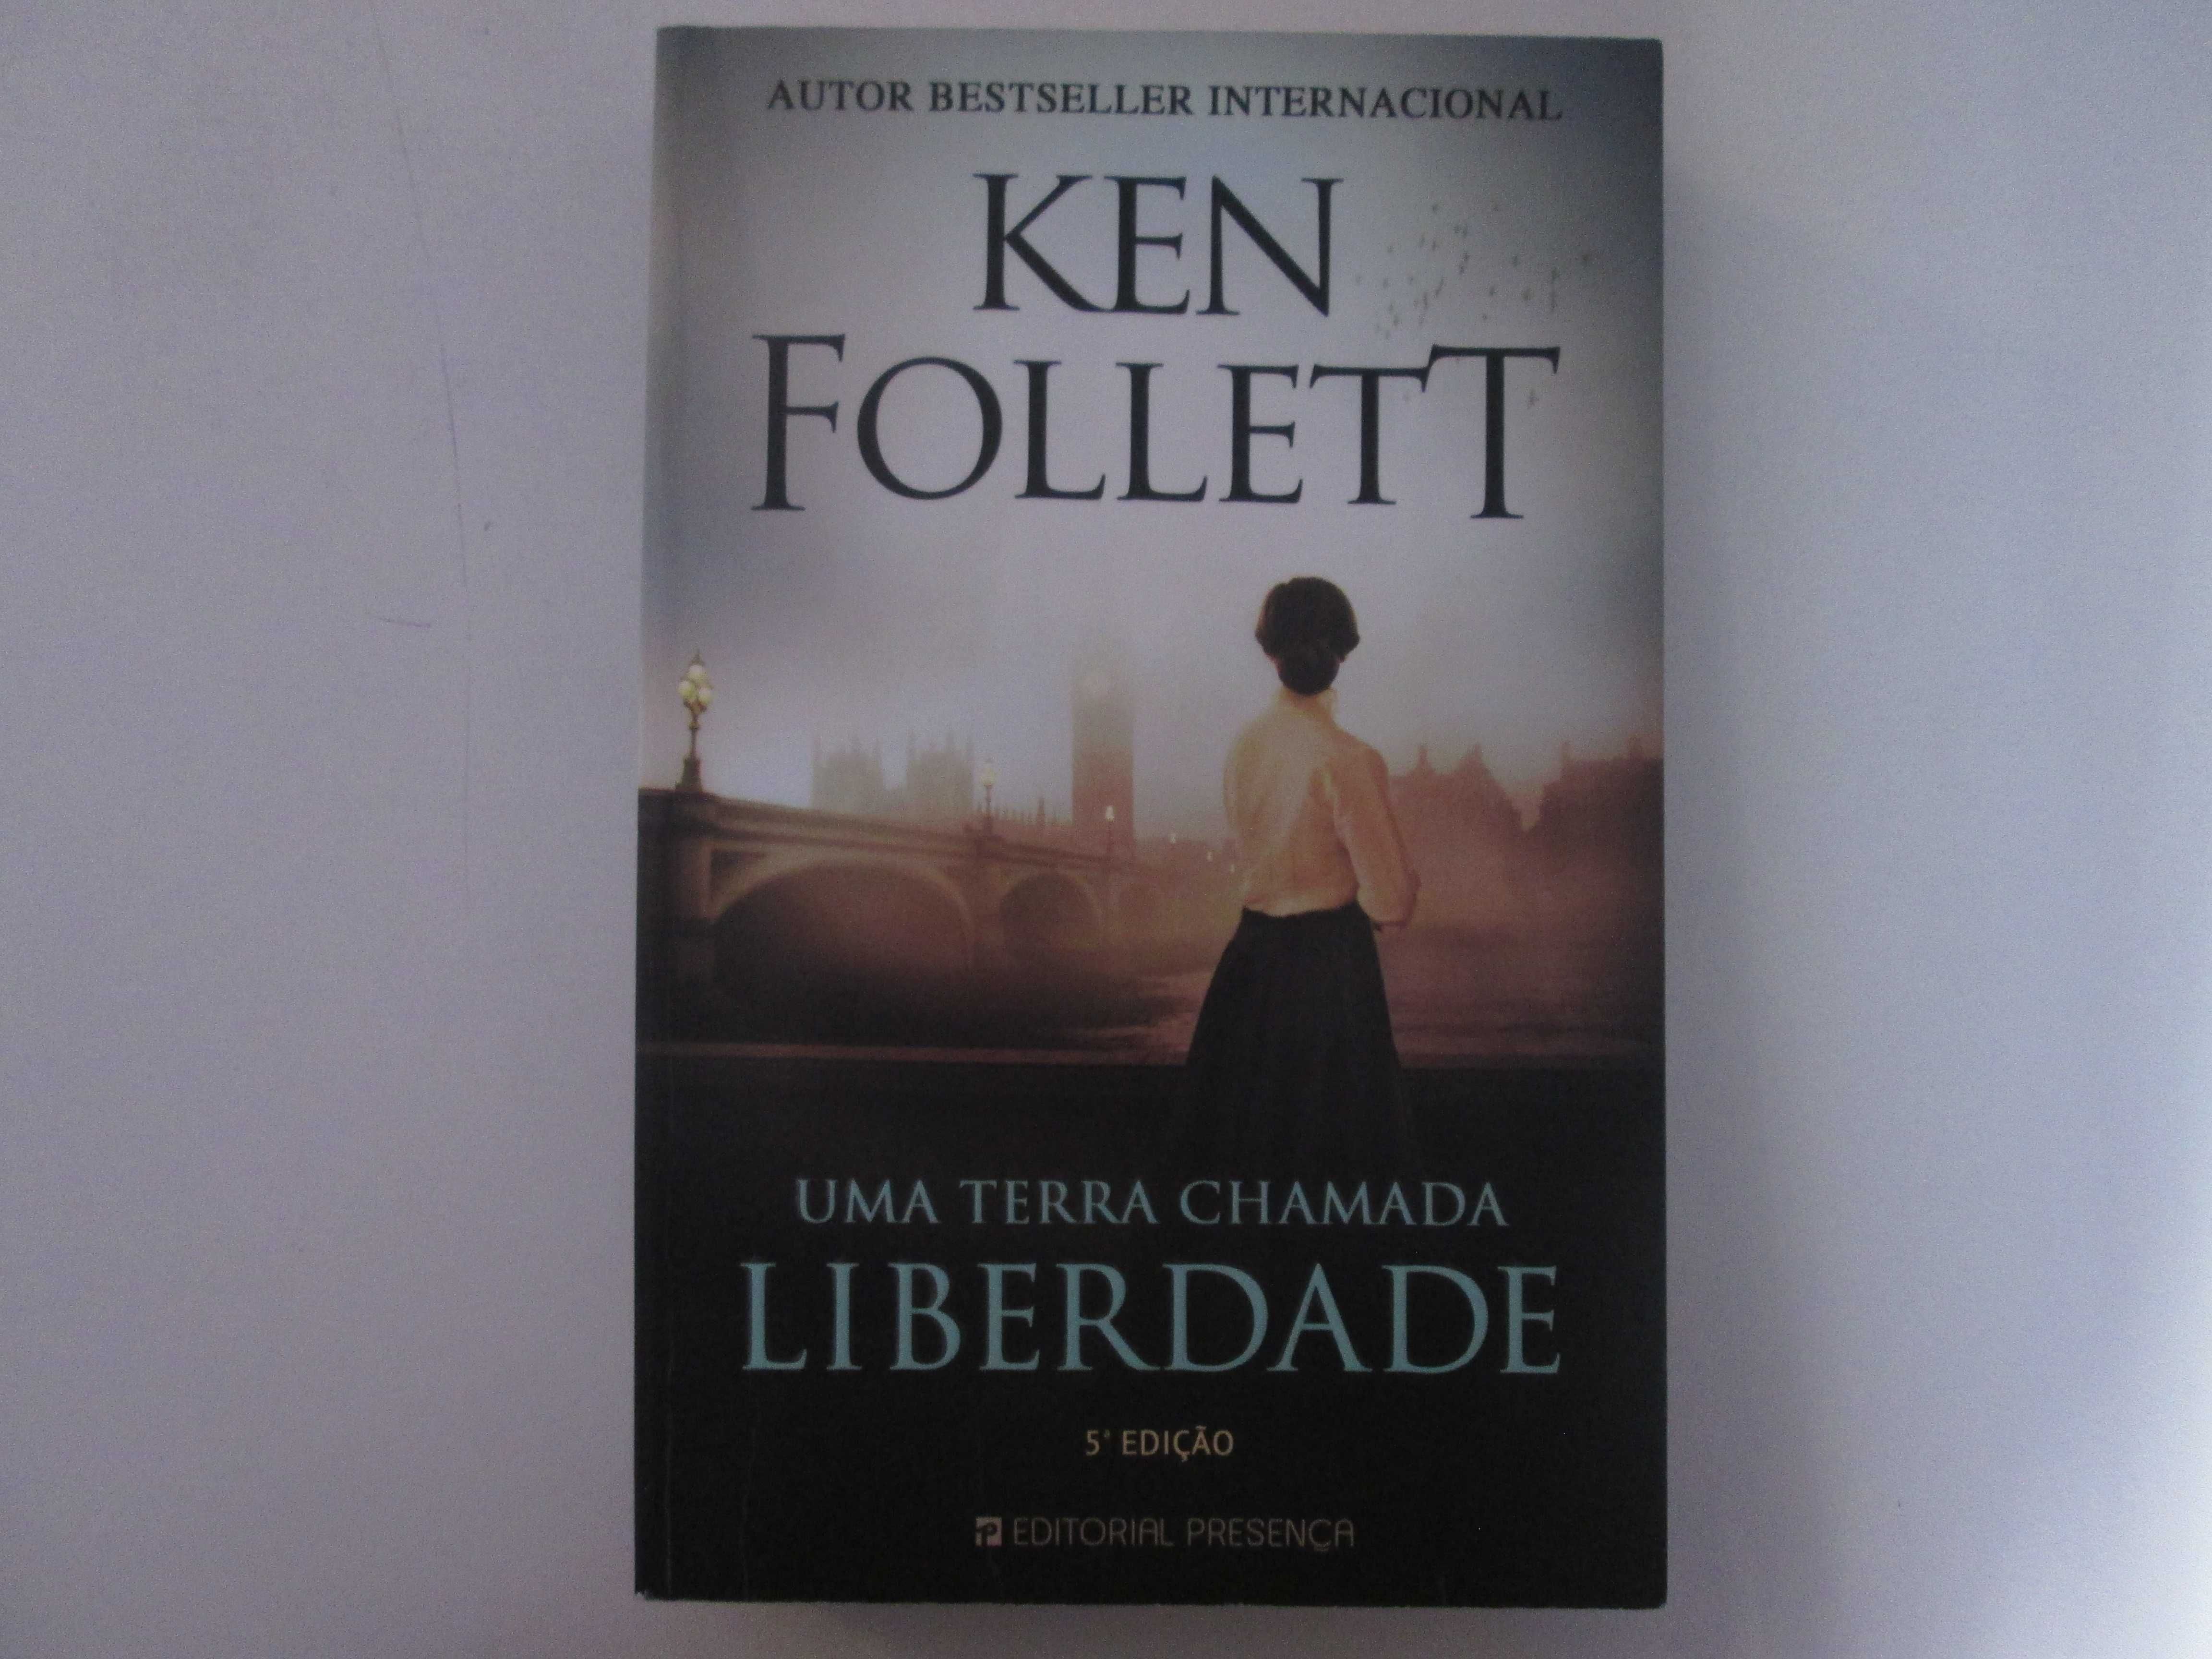 Uma terra chamada liberdade- Ken Follett